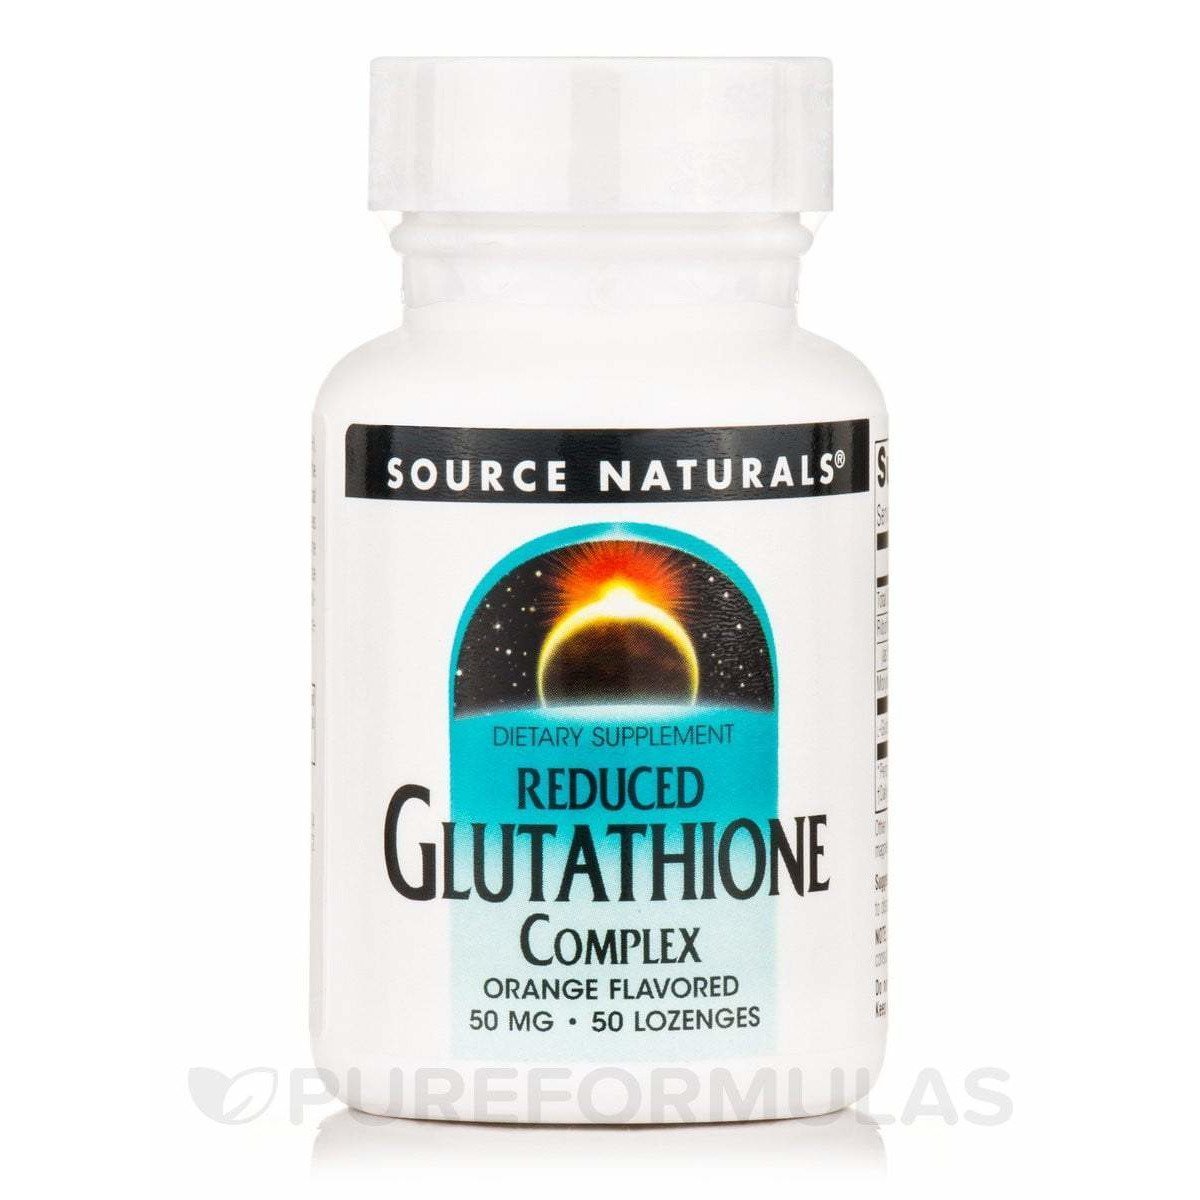 Reduced Glutathione Complex - Orange Flavored - 50mg - 50 Lozenges